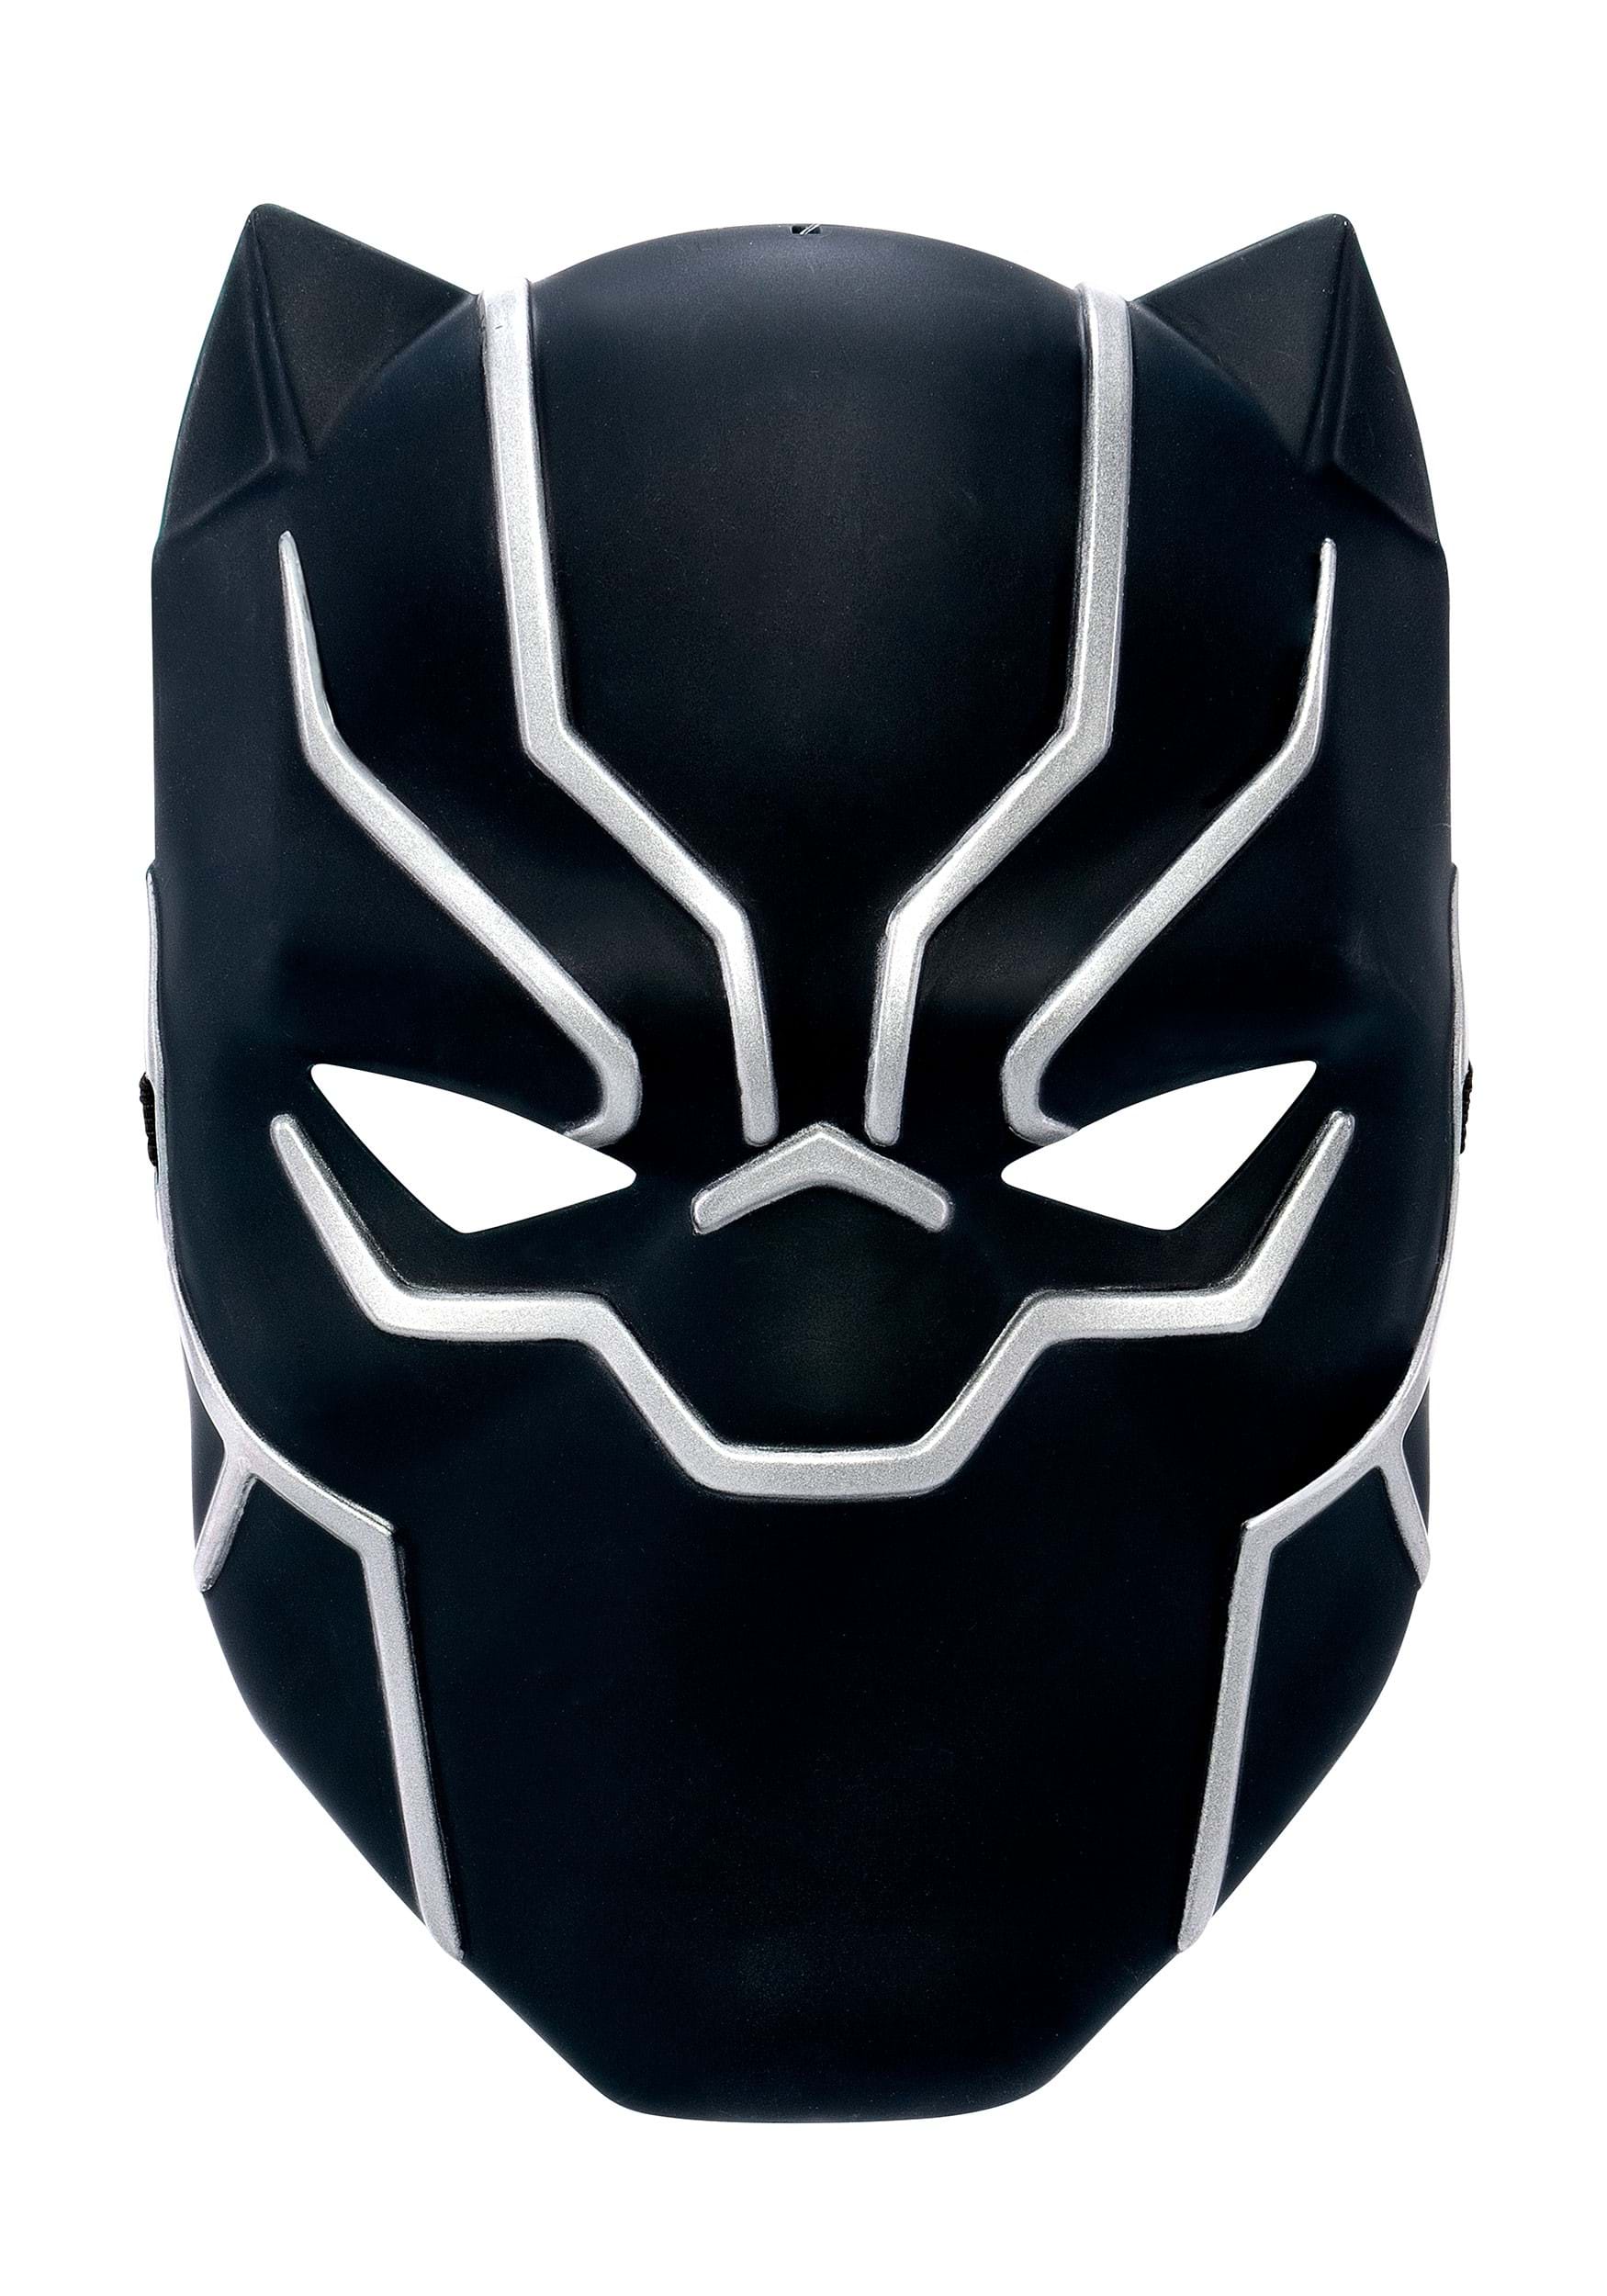 Marvel Black Panther Kid's Value Costume Mask | Superhero Masks